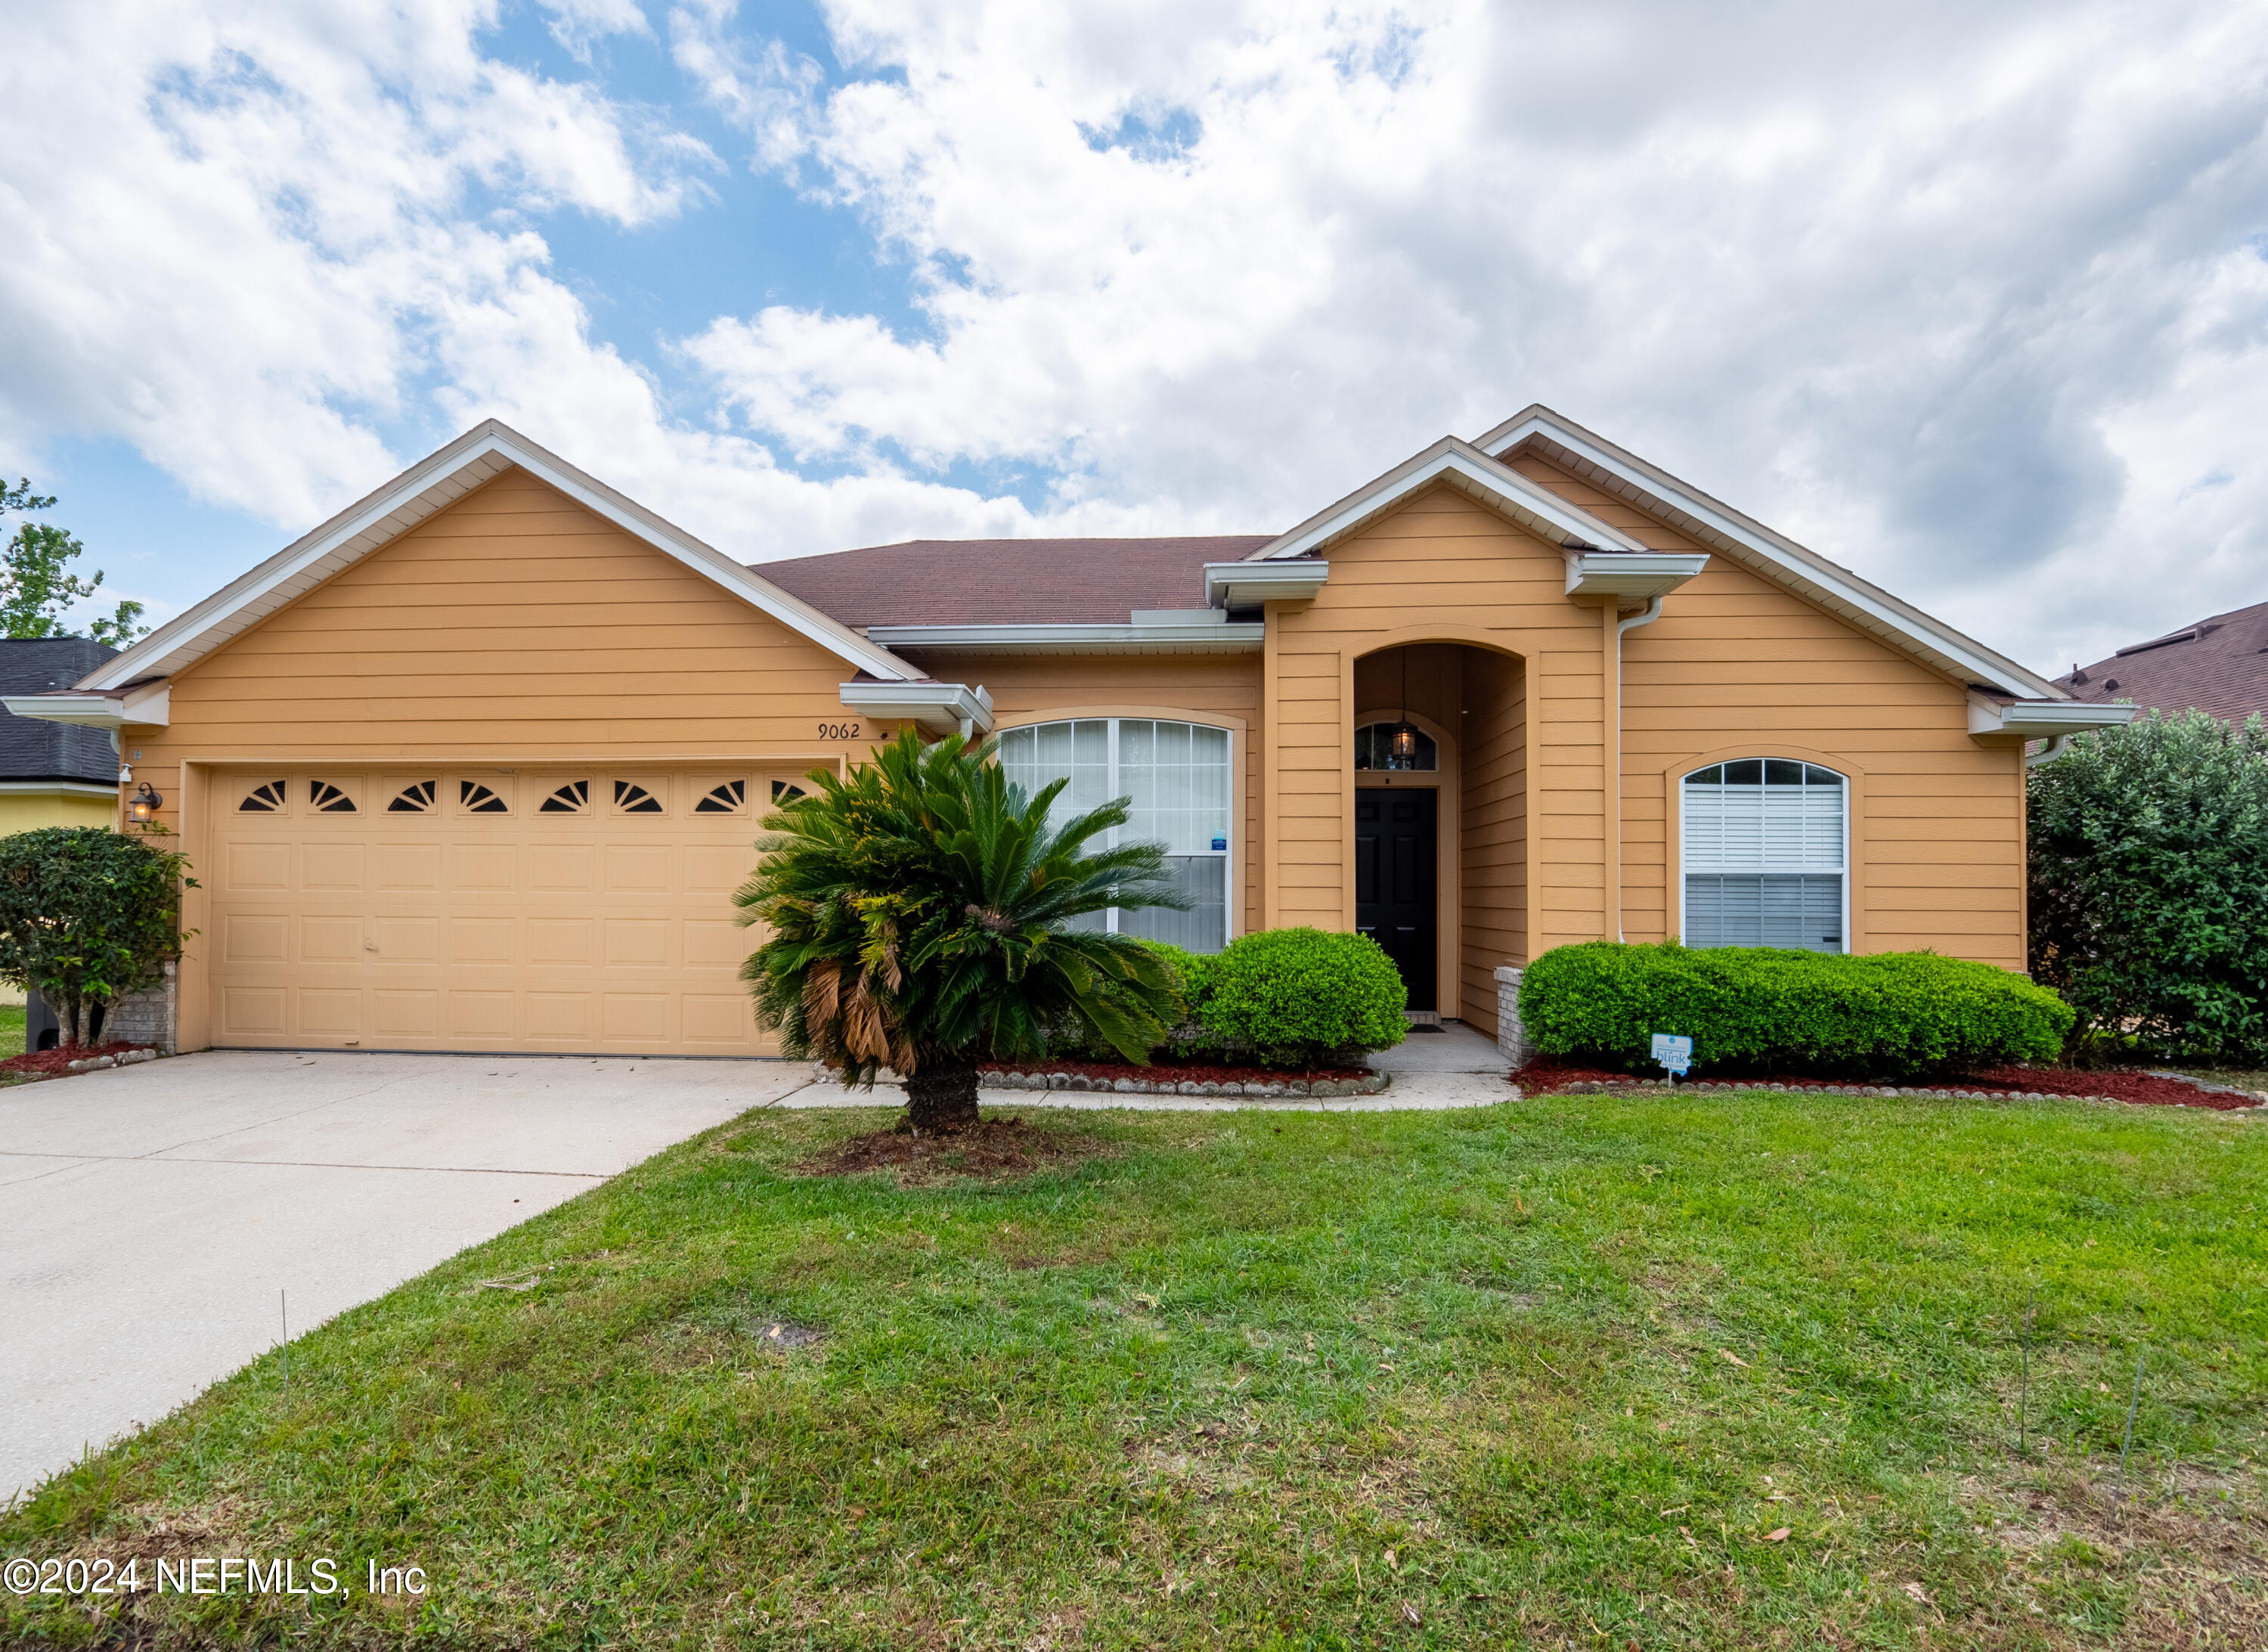 Jacksonville, FL home for sale located at 9062 Prosperity Lake Drive, Jacksonville, FL 32244